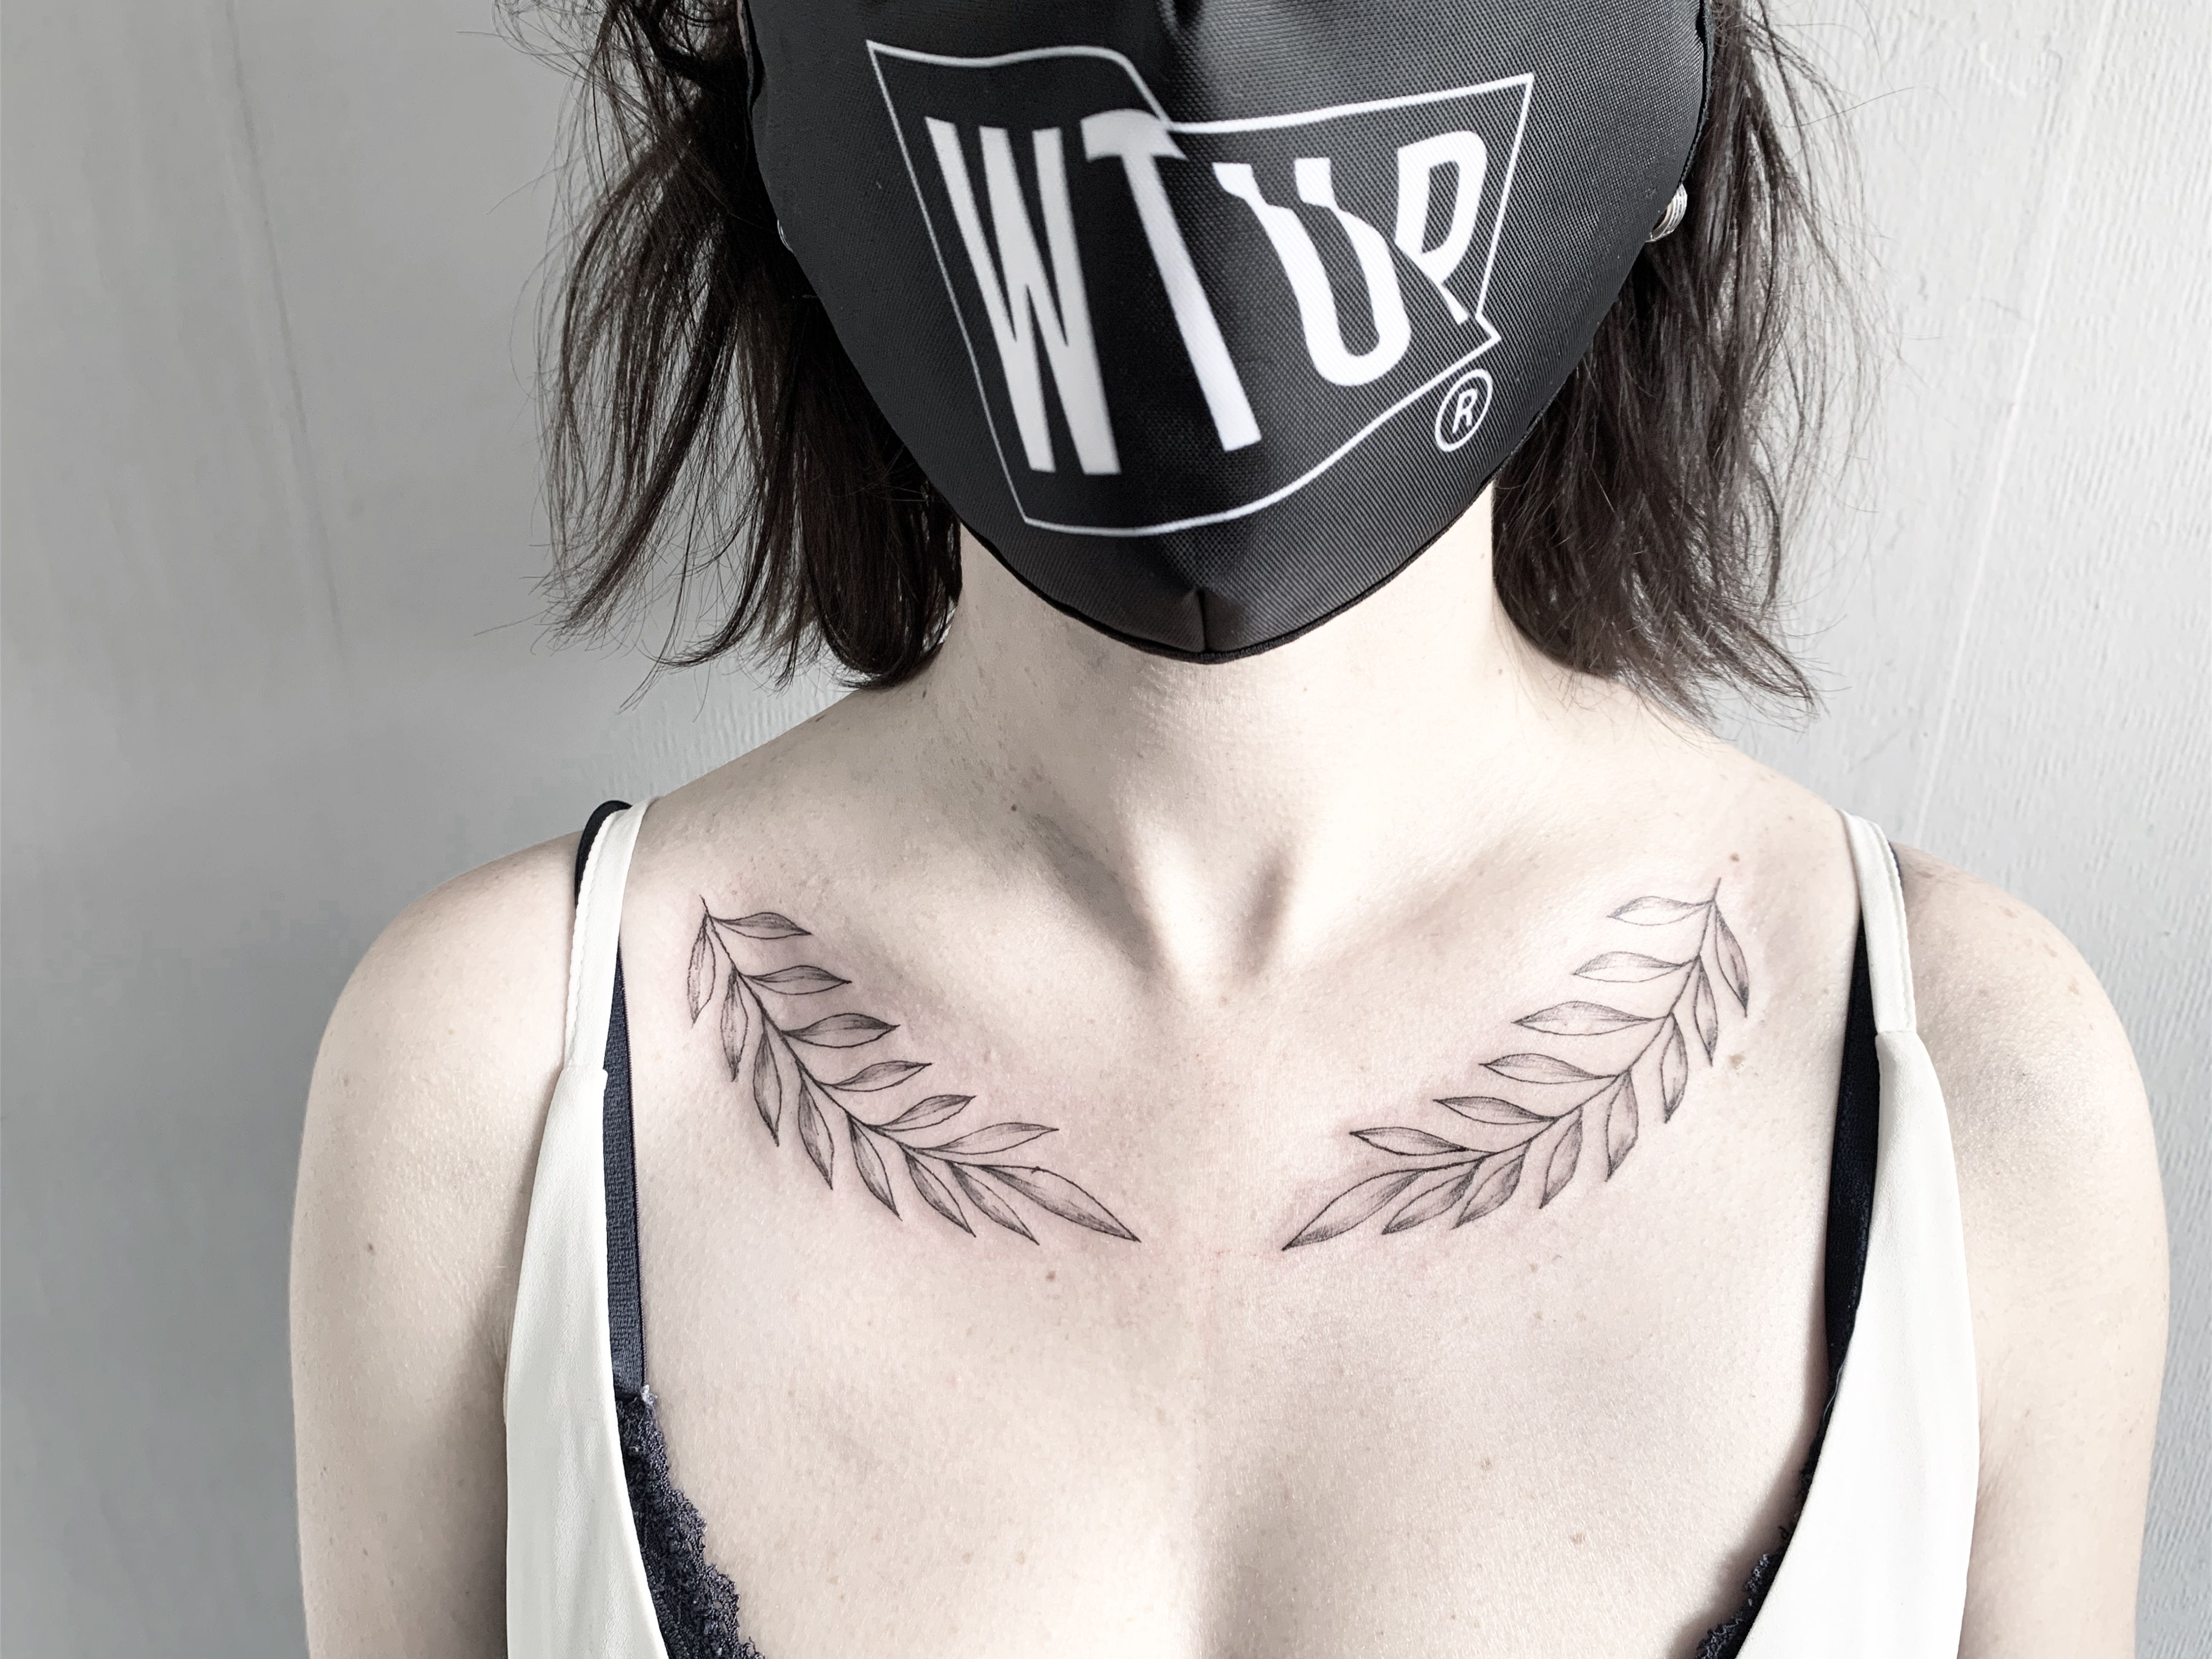 47 Sexy Collarbone Tattoo Ideas Photos For Inspiration  POPSUGAR Beauty